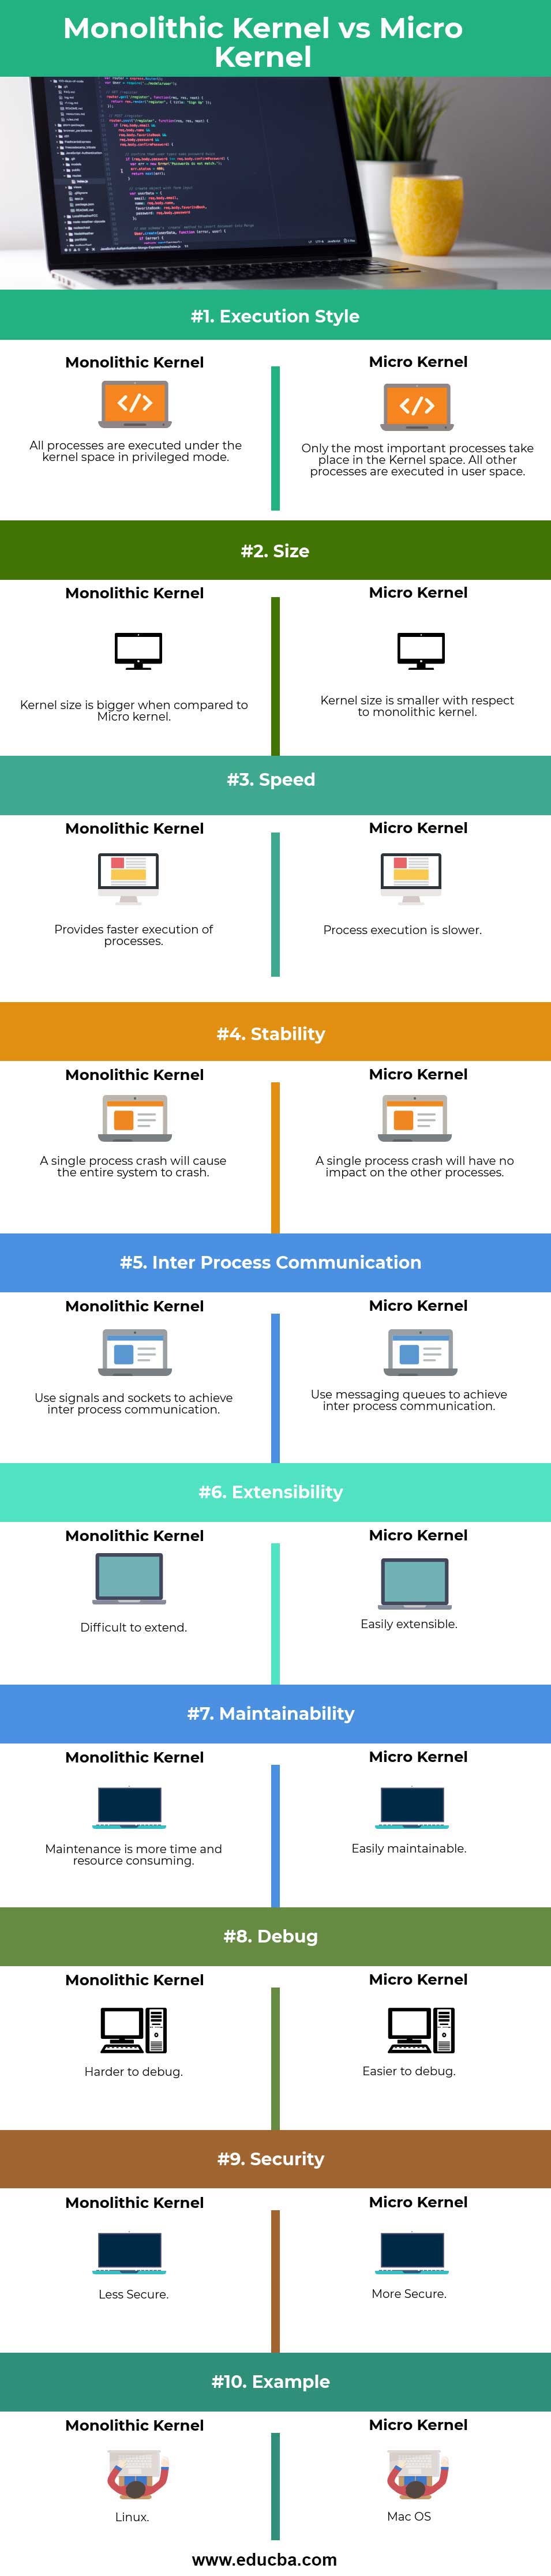 Monolithic Kernel vs Micro Kernel info